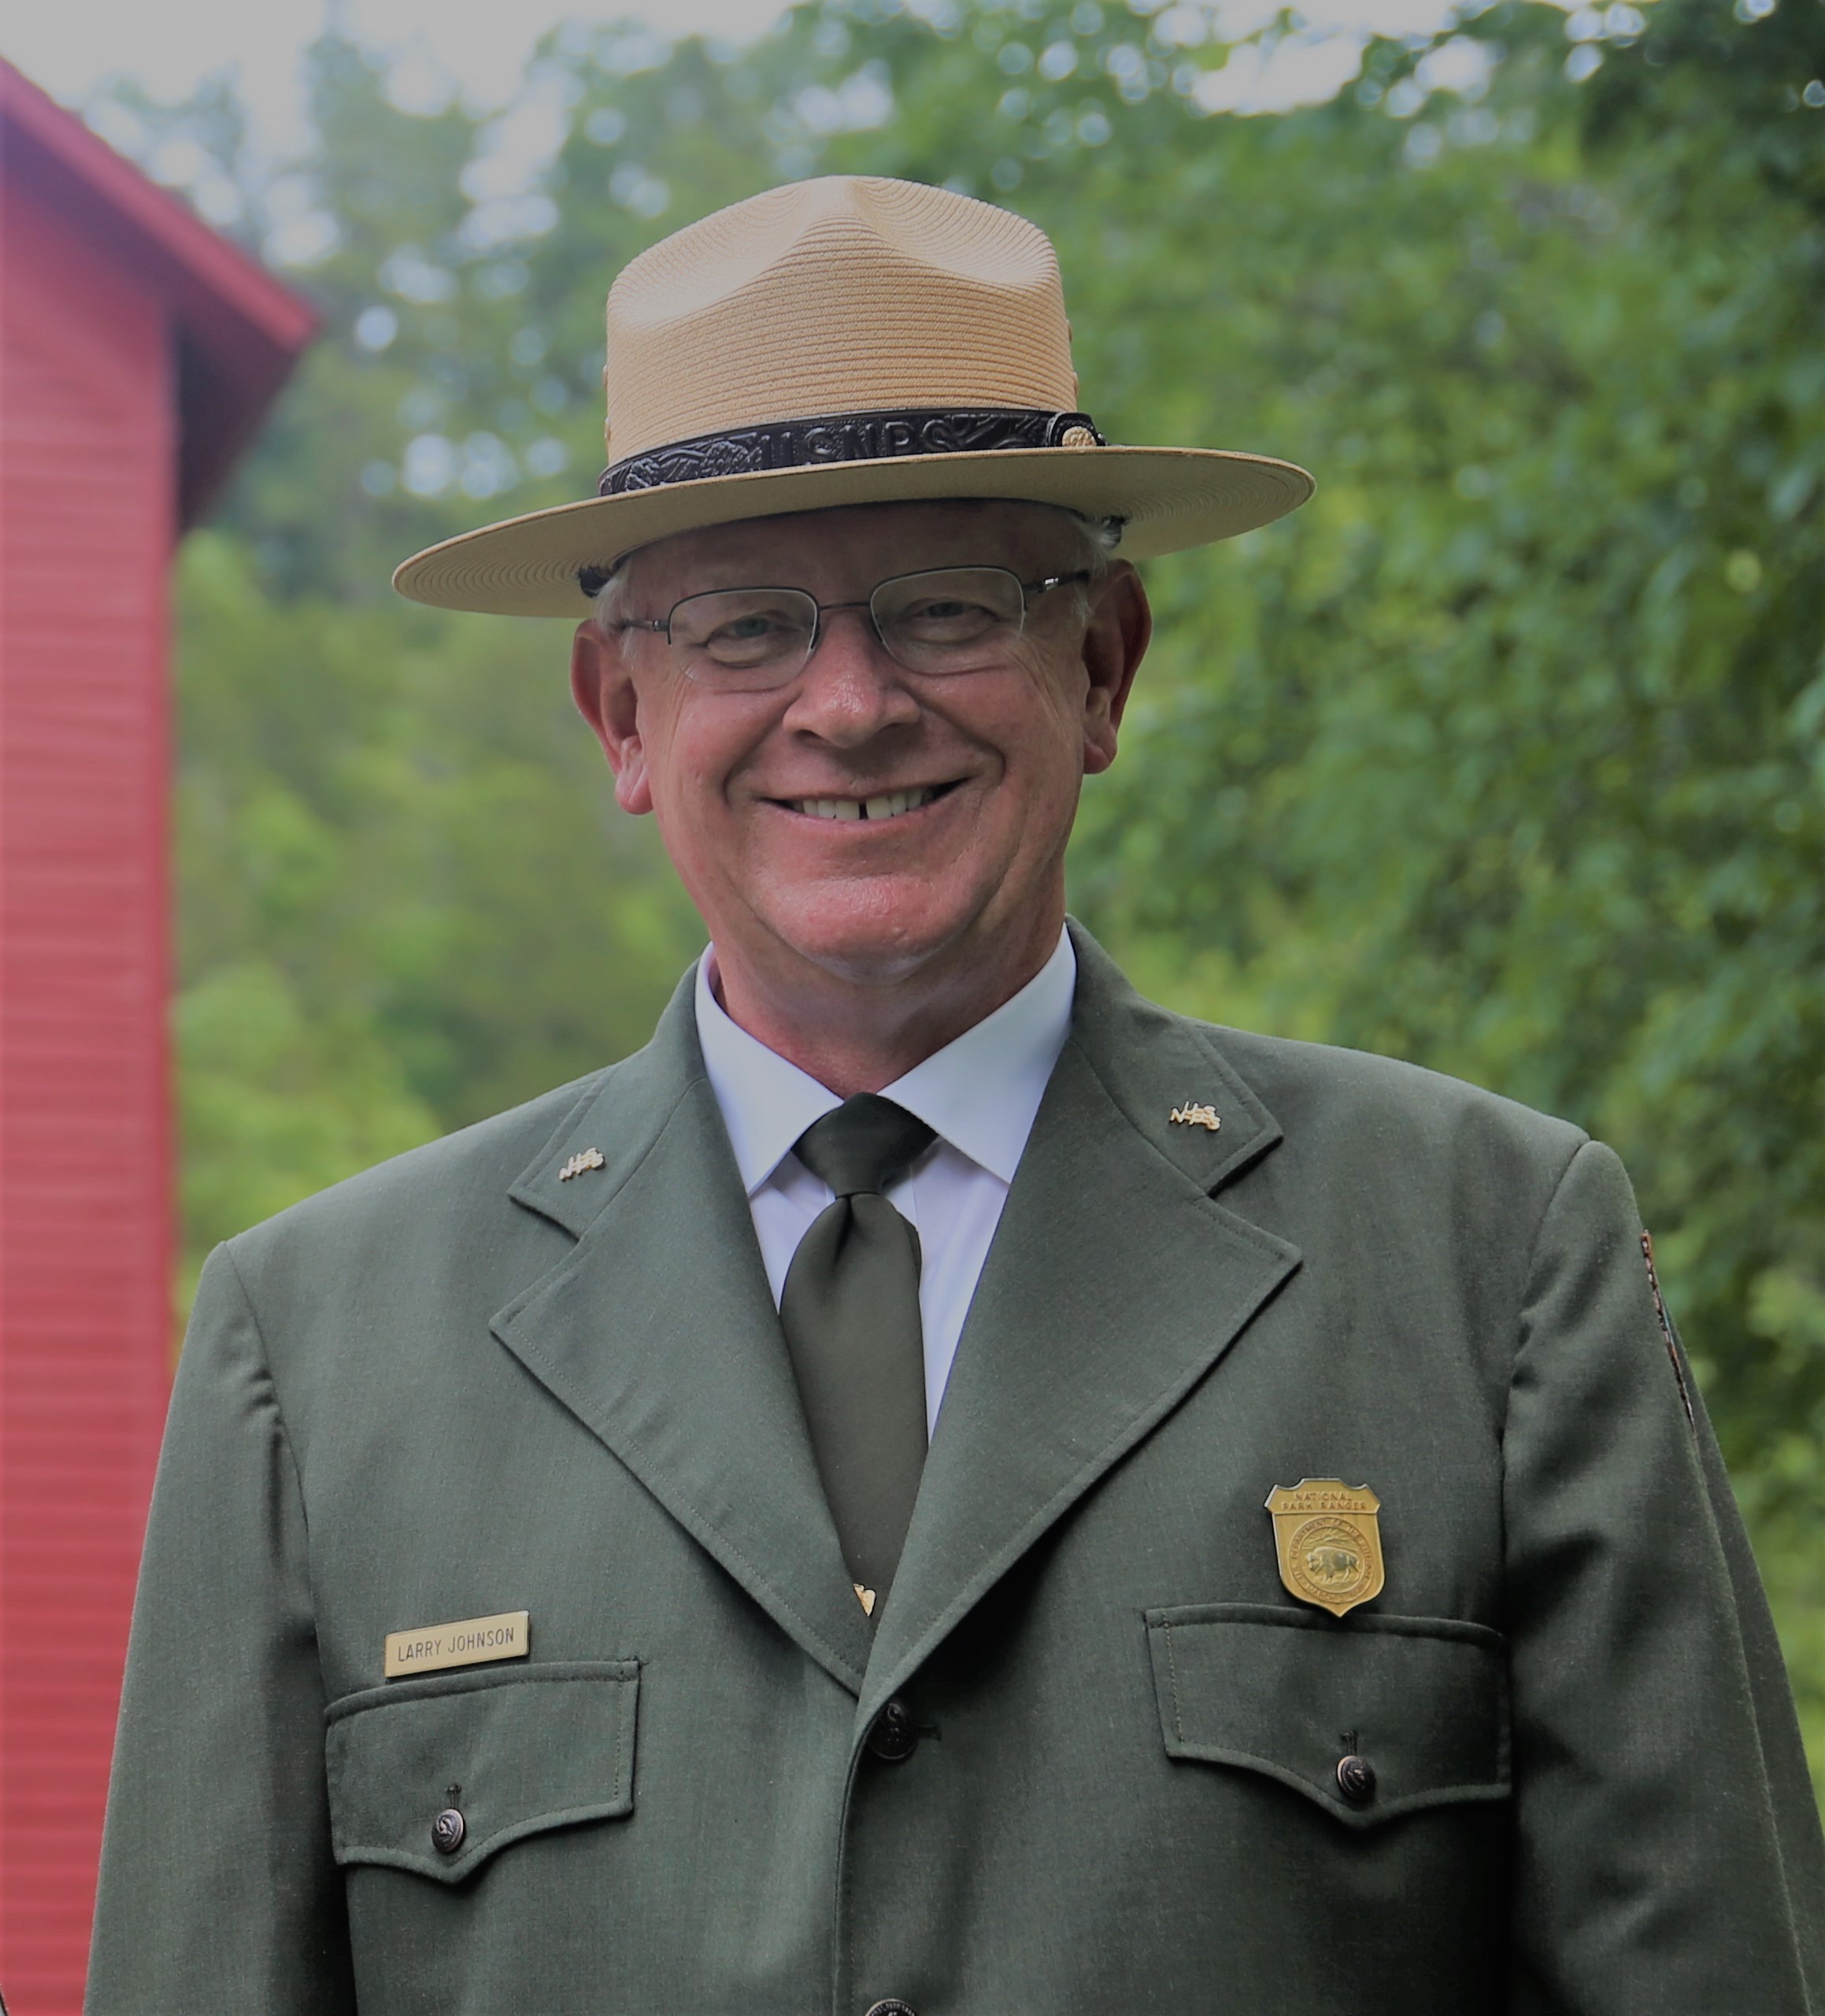 Superintendent Larry Johnson in green park service dress uniform and flat hat